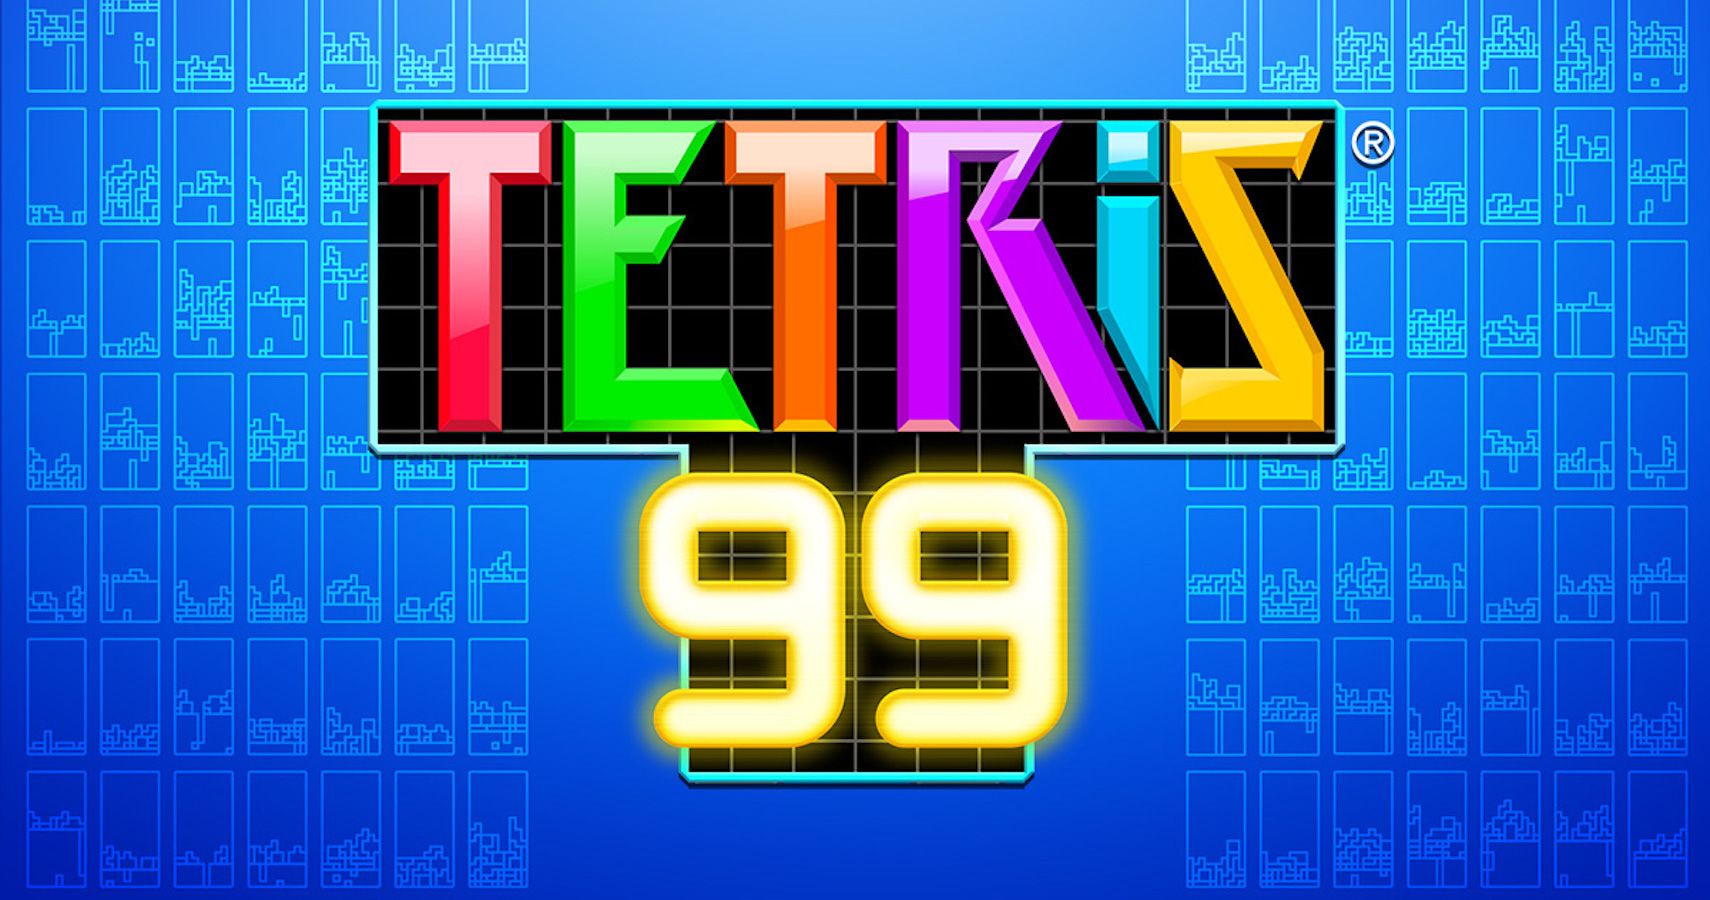 Tetris 99 Gets Update Unfortunately No New Maps Or Guns